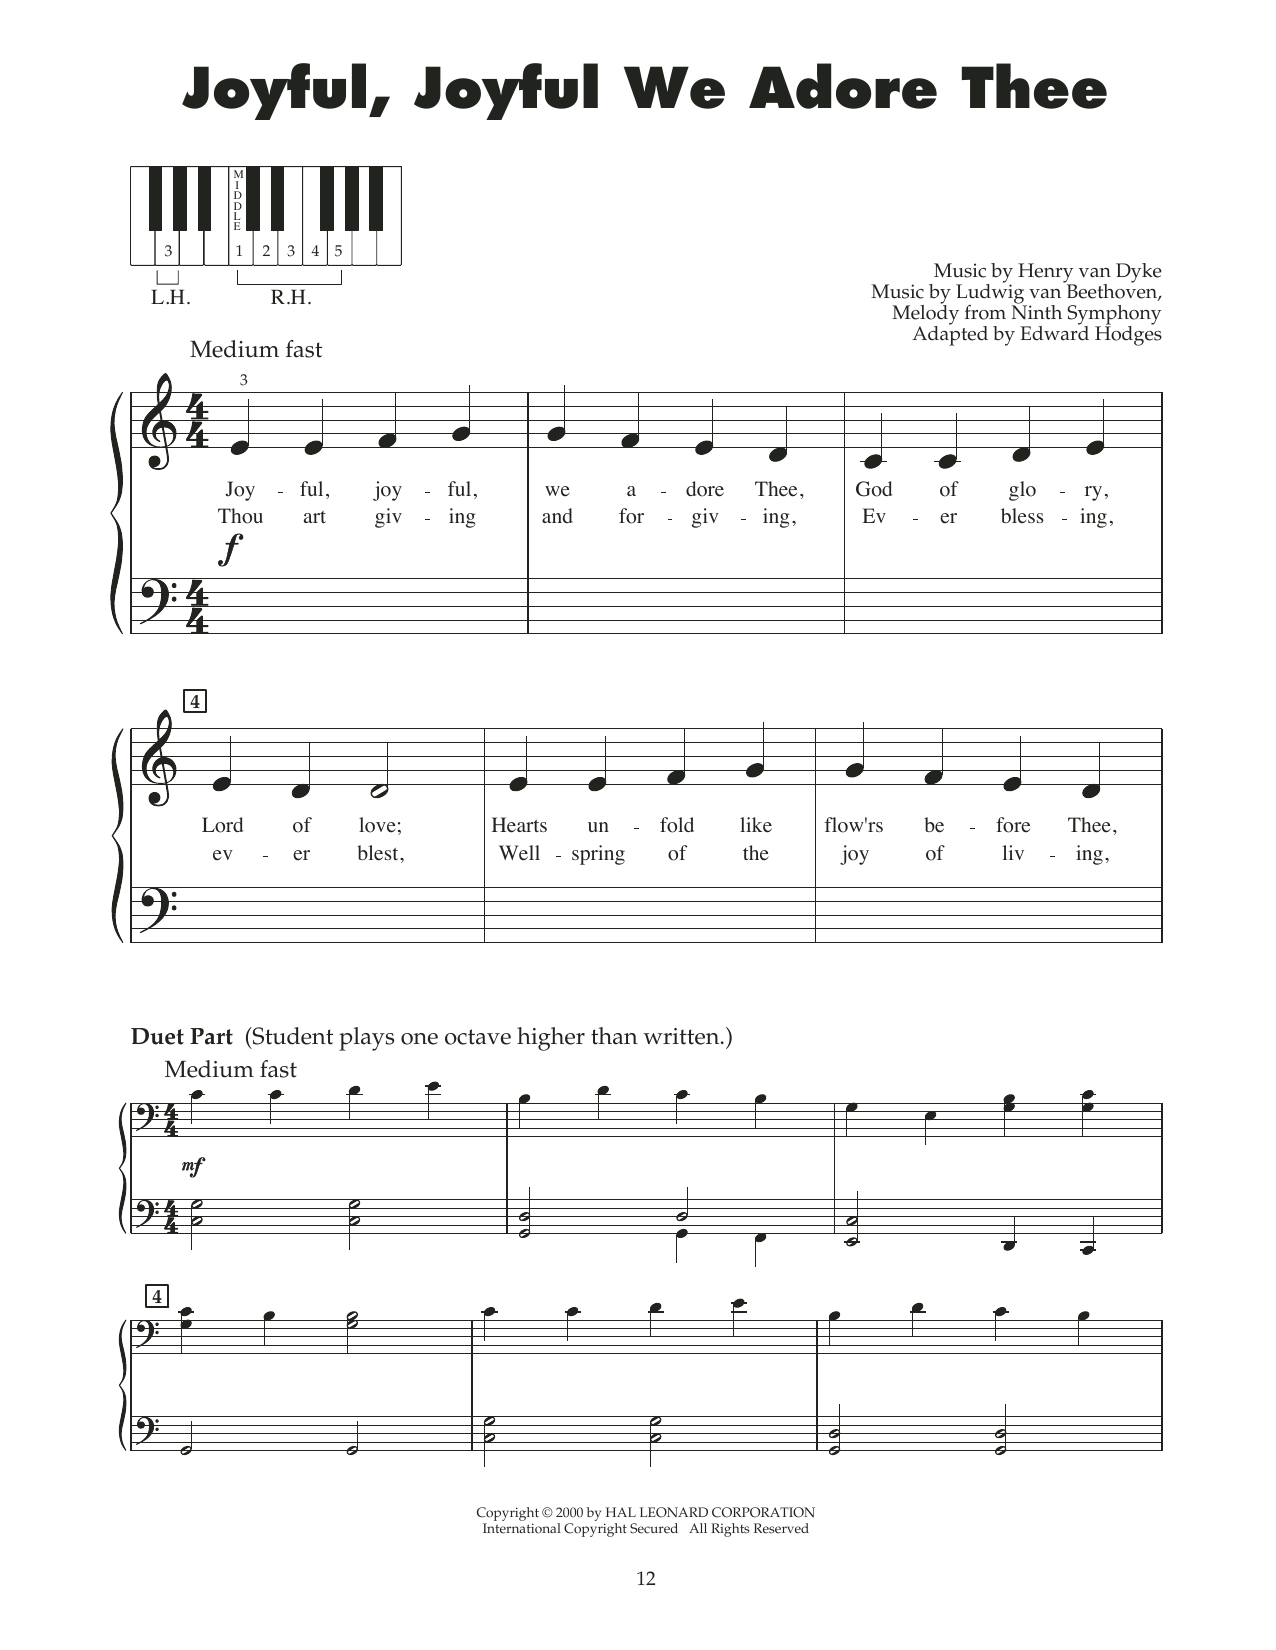 Ludwig van Beethoven Joyful, Joyful, We Adore Thee (arr. Carol Klose) Sheet Music Notes & Chords for 5-Finger Piano - Download or Print PDF